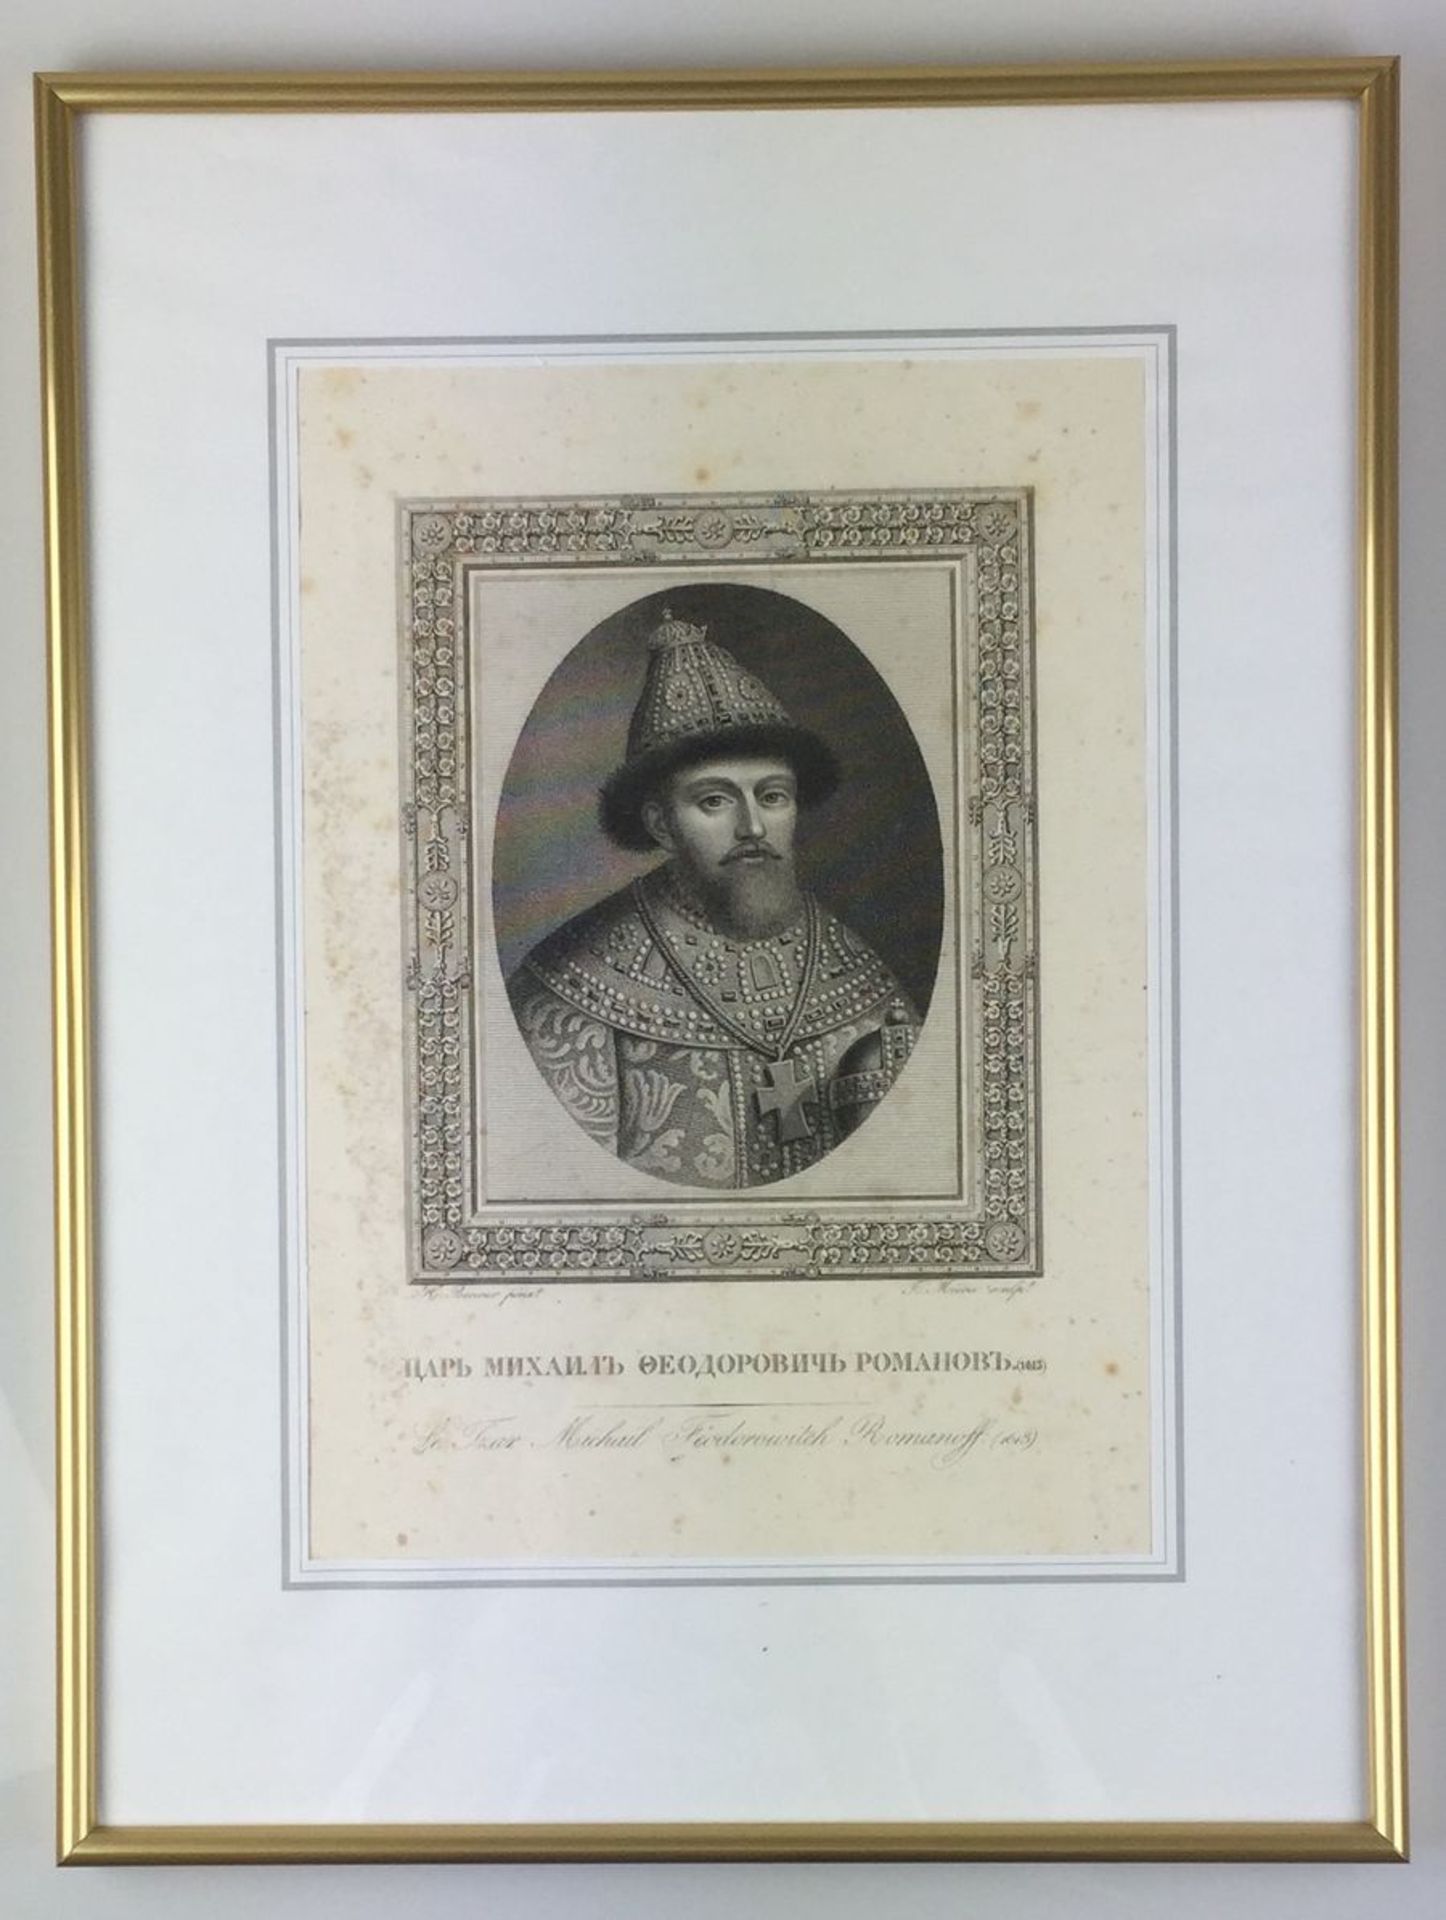 Tsar Mikhail Fedorovich Romanov. Engraving, 1817. Joseph Mecou (1771-1836) after Jean [...]